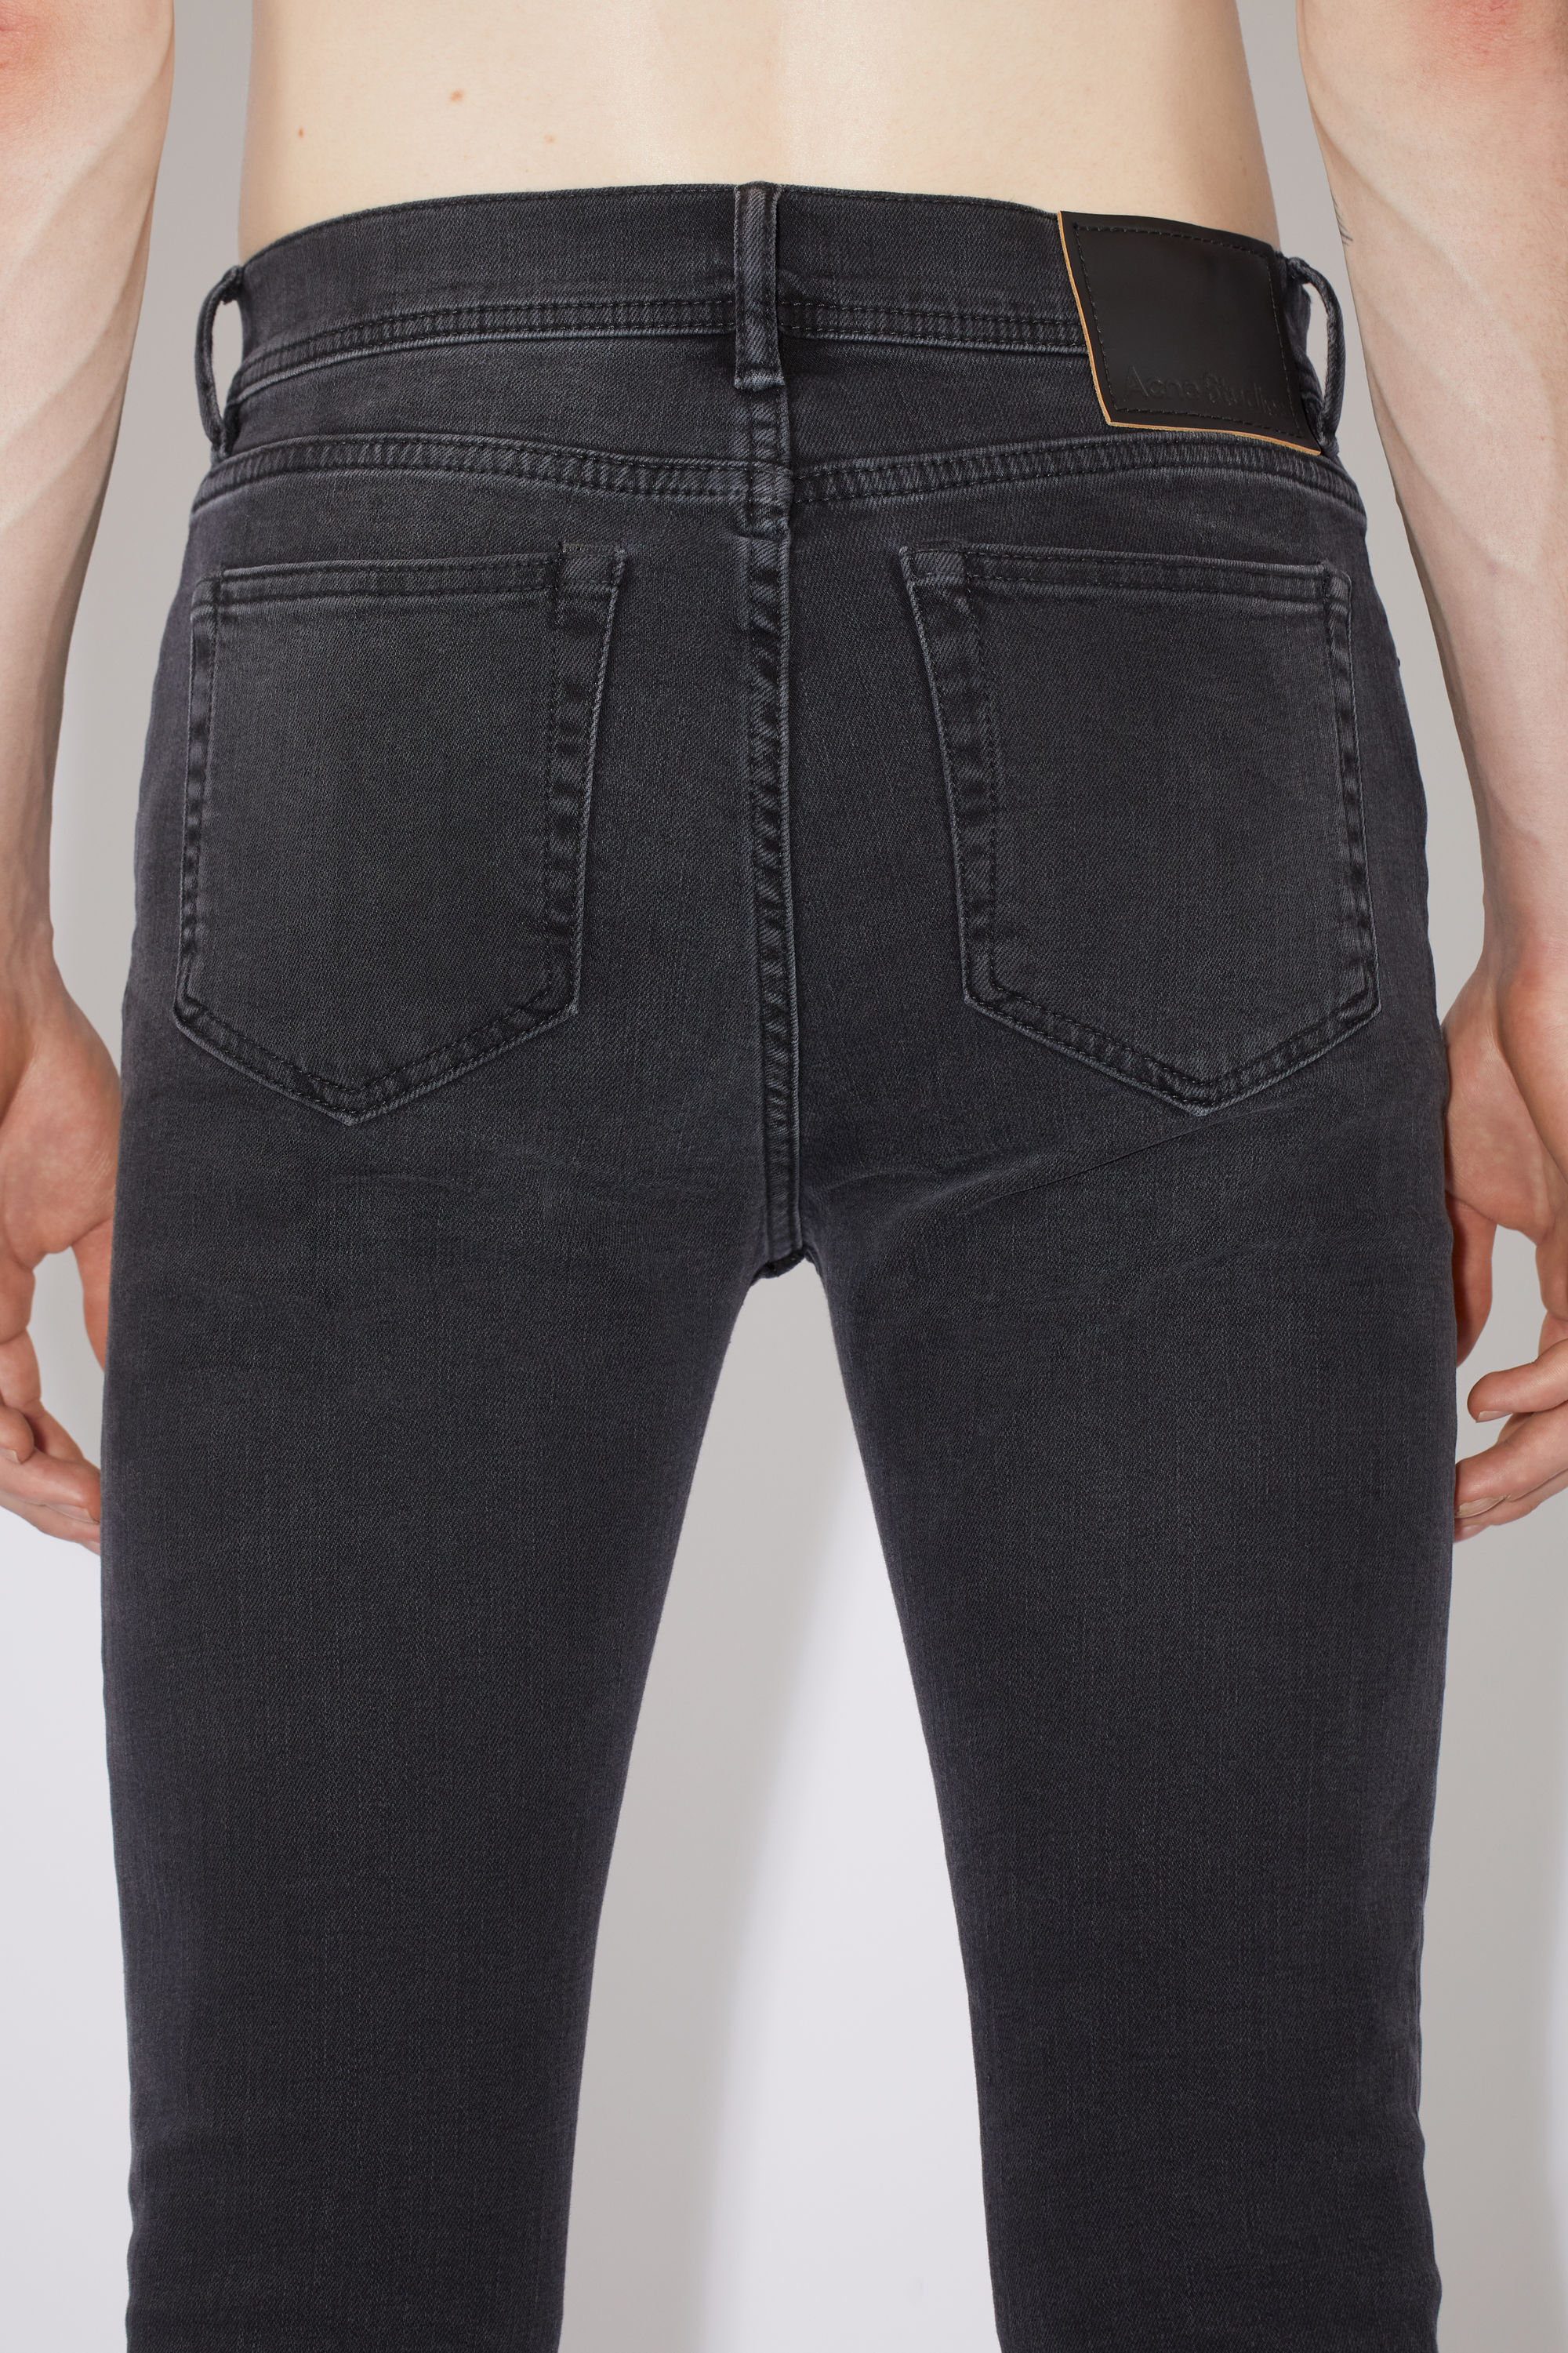 Acne Studios - Skinny fit jeans - North - Used black